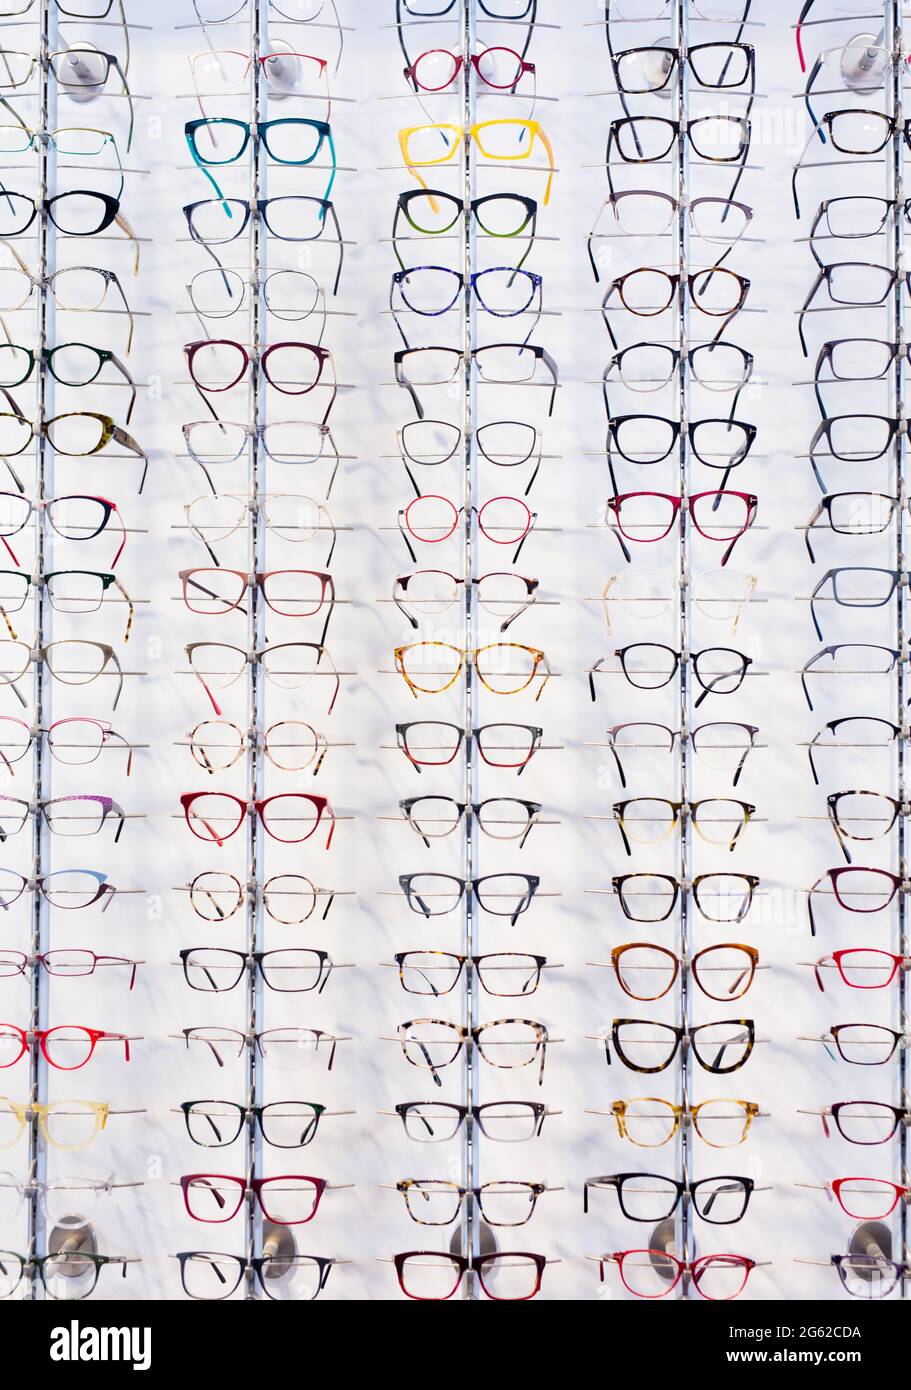 Glasses showcase in modern optic shop Stock Photo - Alamy